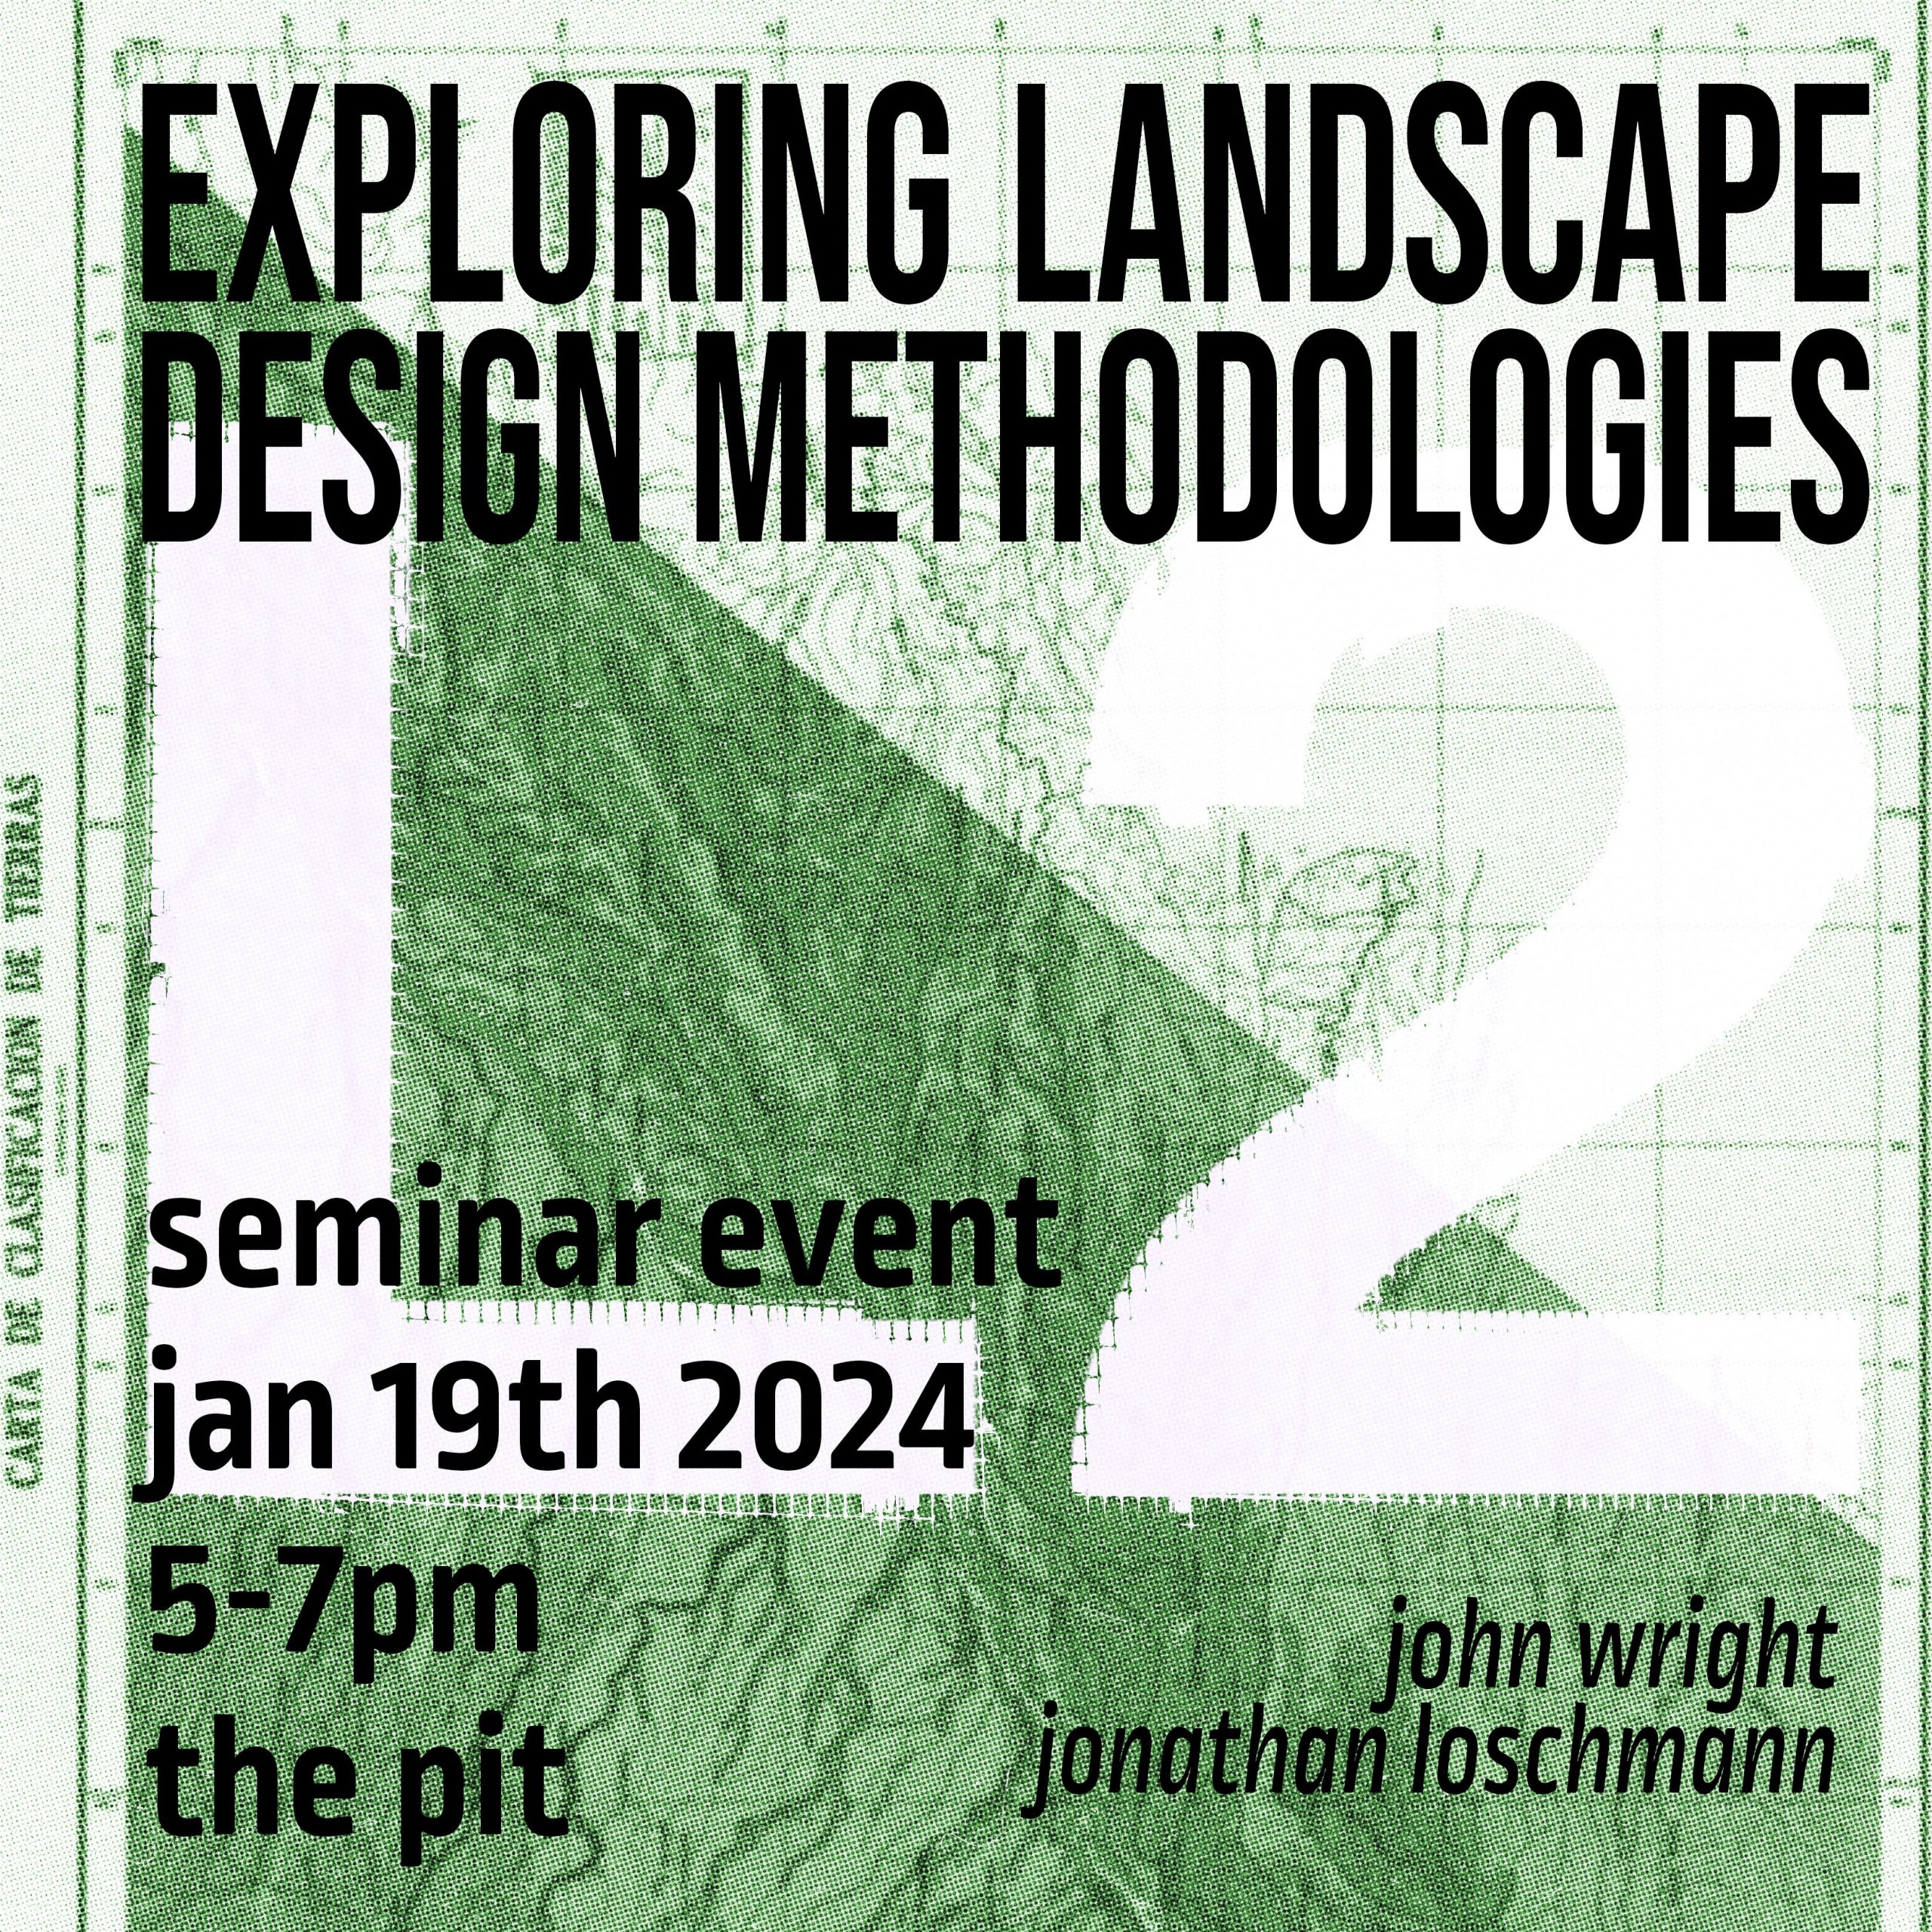 a graphic poster for the seminar event titled "EXPLORING LANDSCAPE DESIGN METHODOLOGIES"